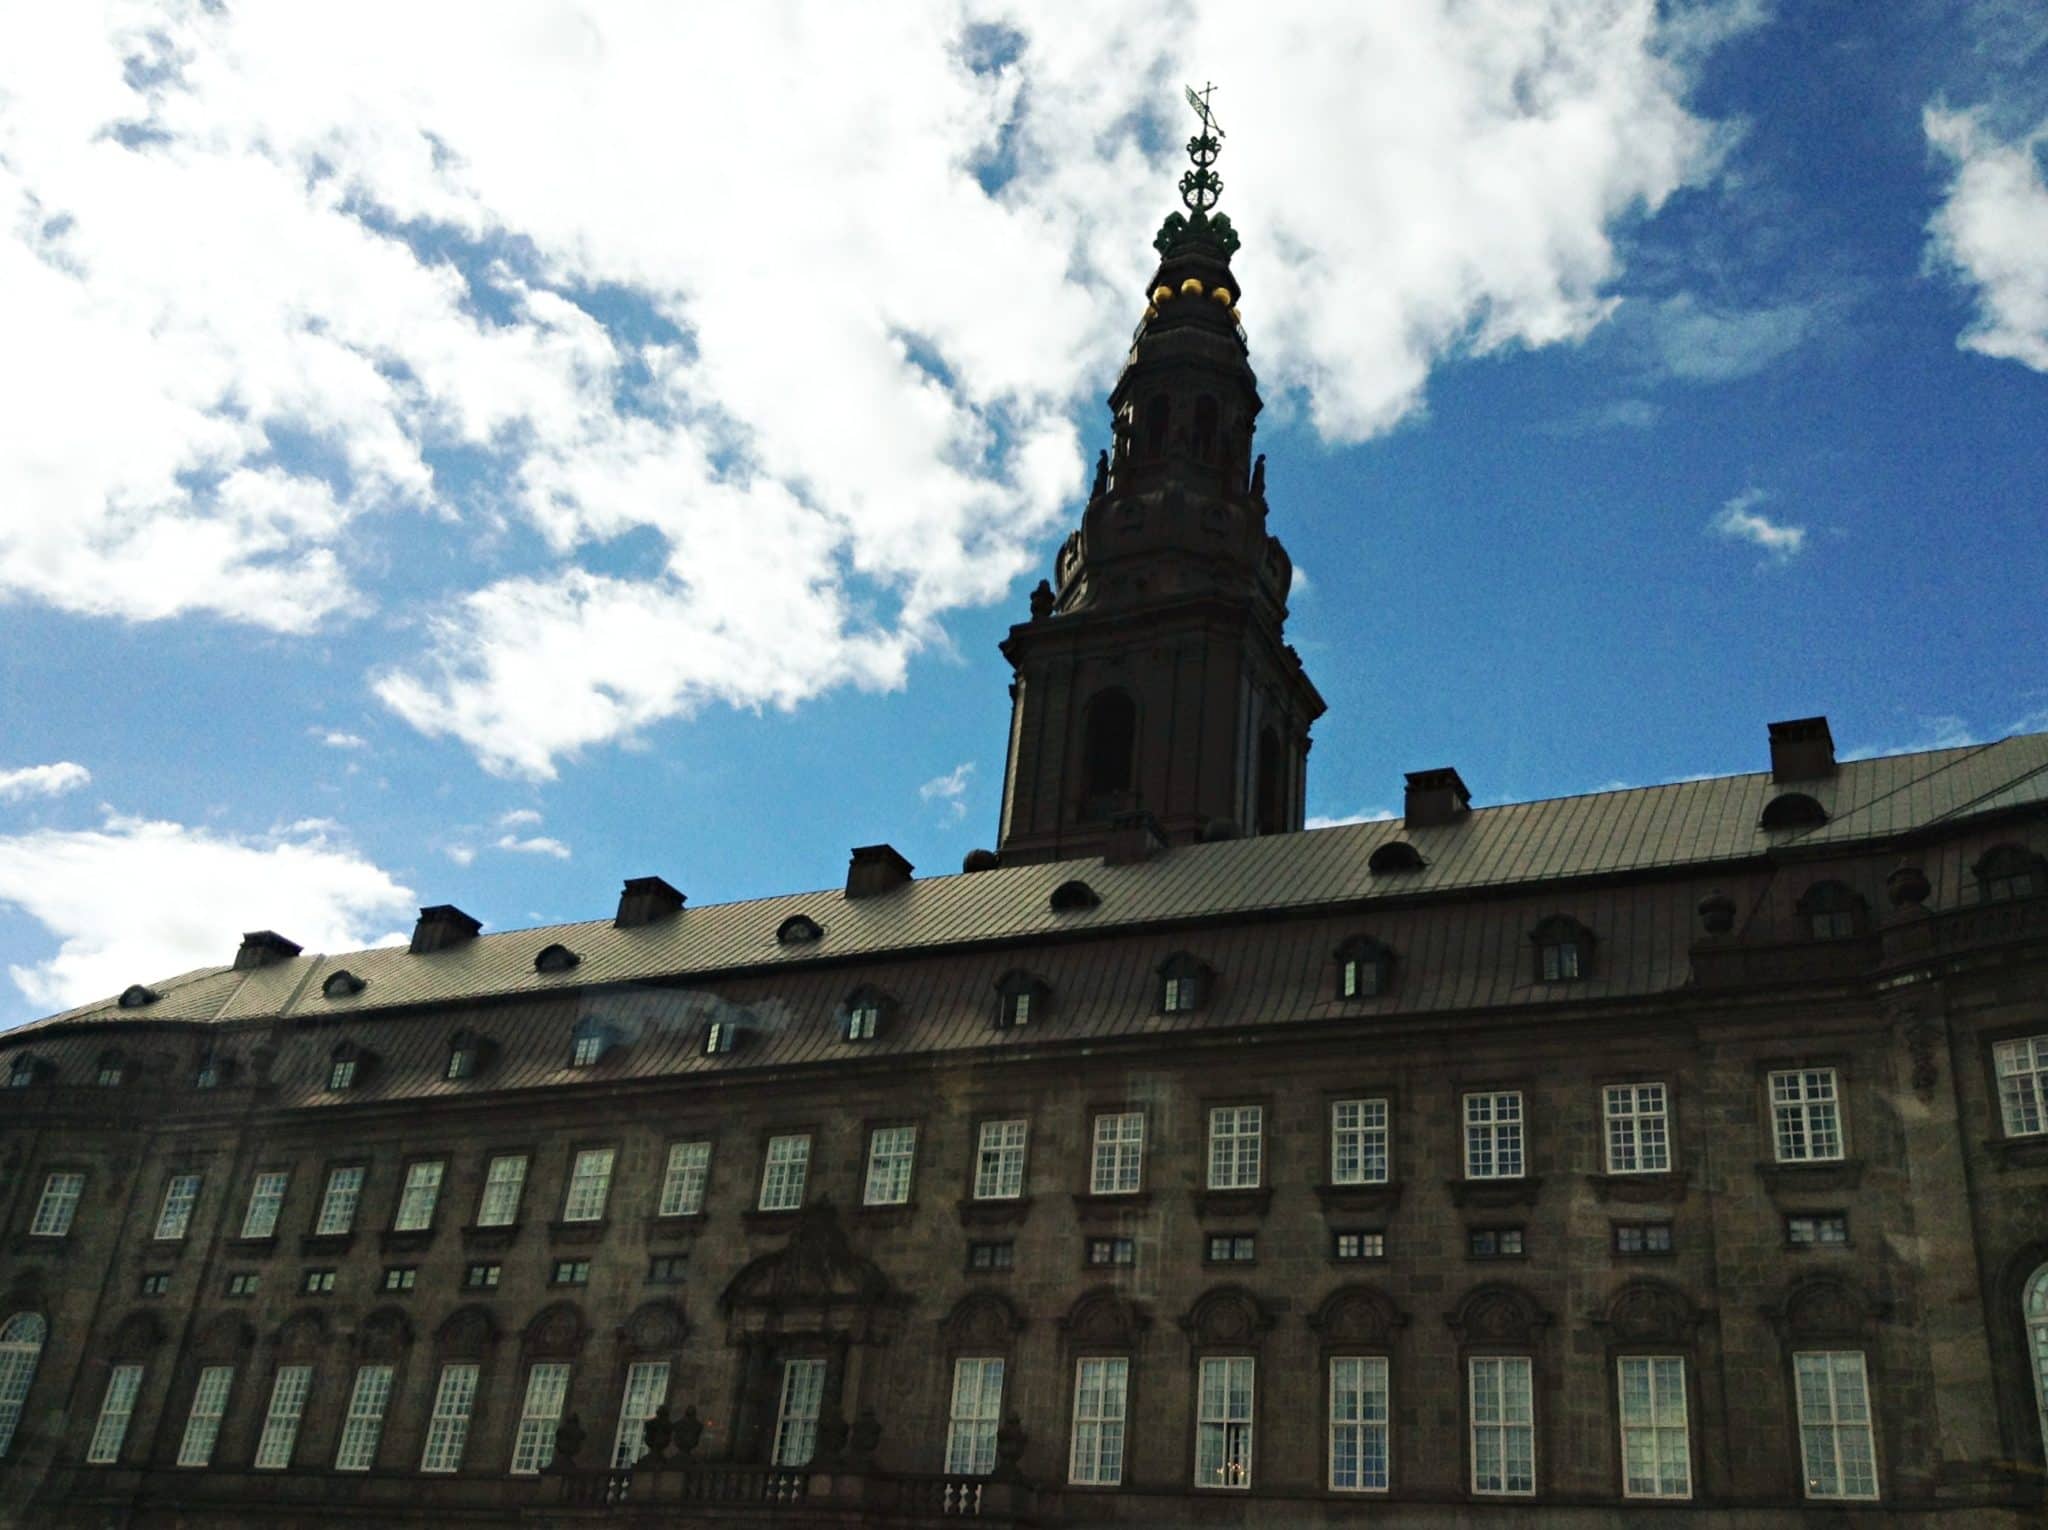 Folketinget: The Danish Parliament in Copenhagen